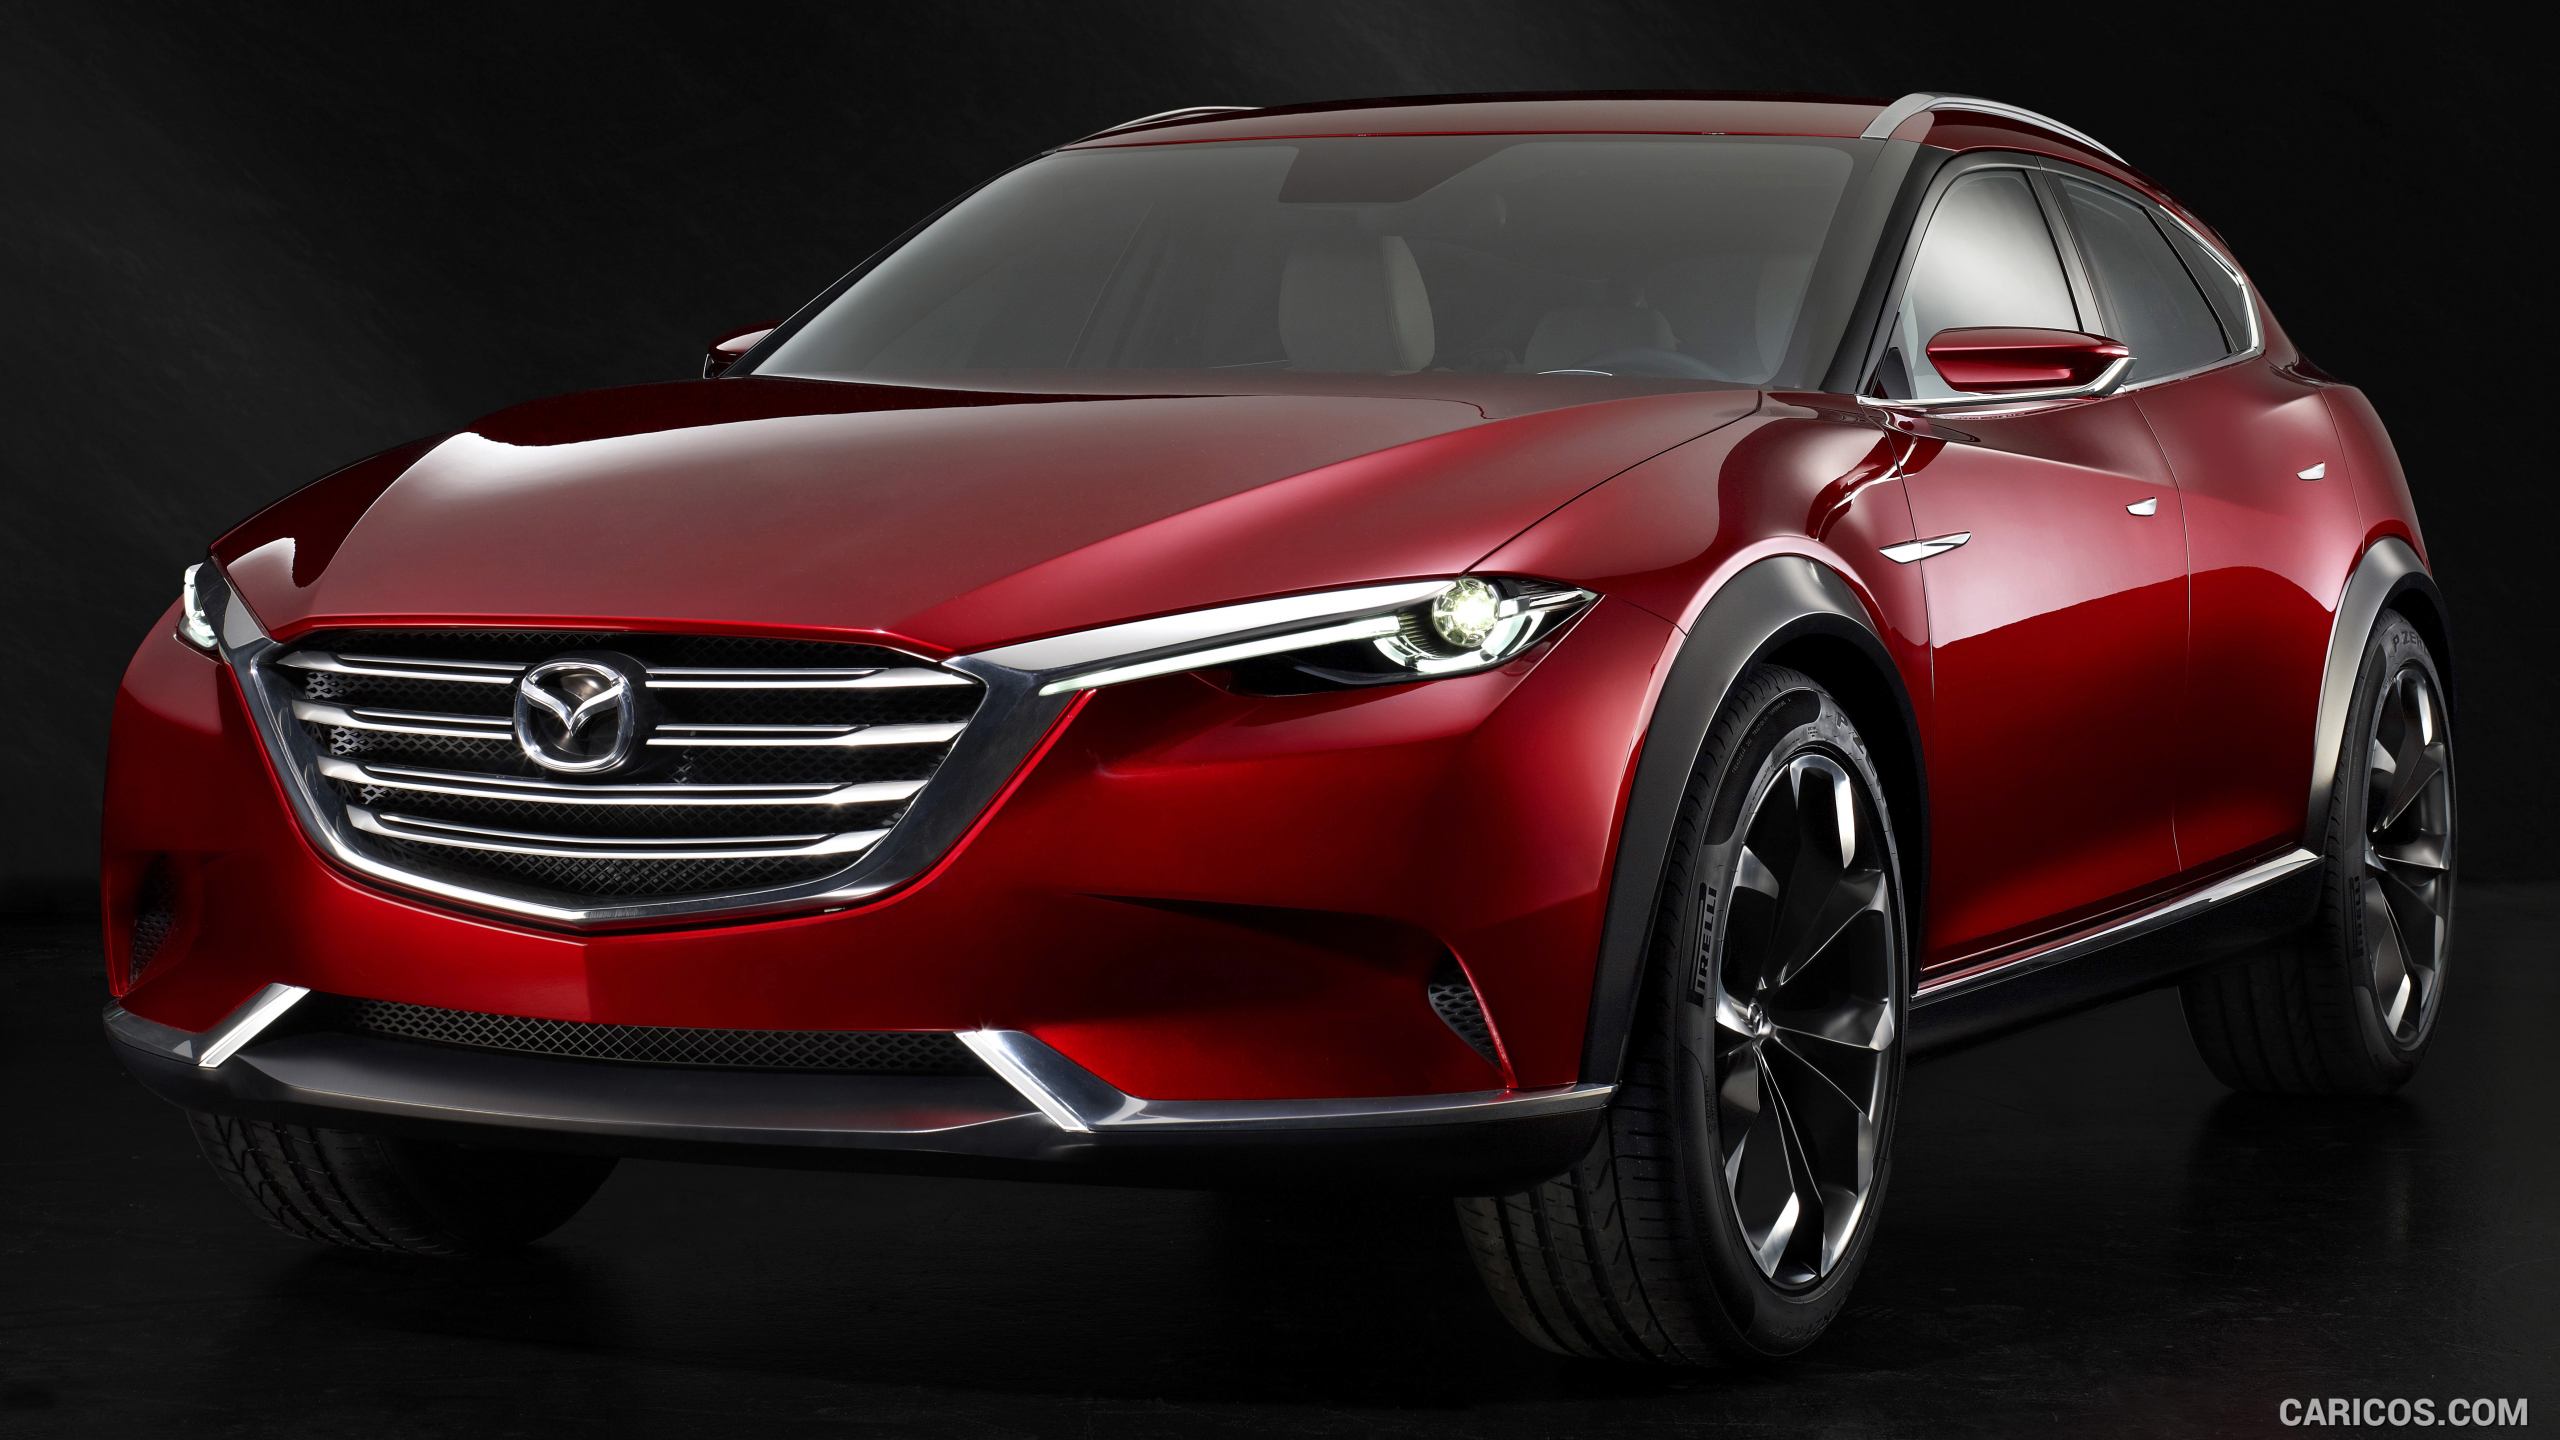 2015 Mazda Koeru Crossover Concept - Front, #7 of 17